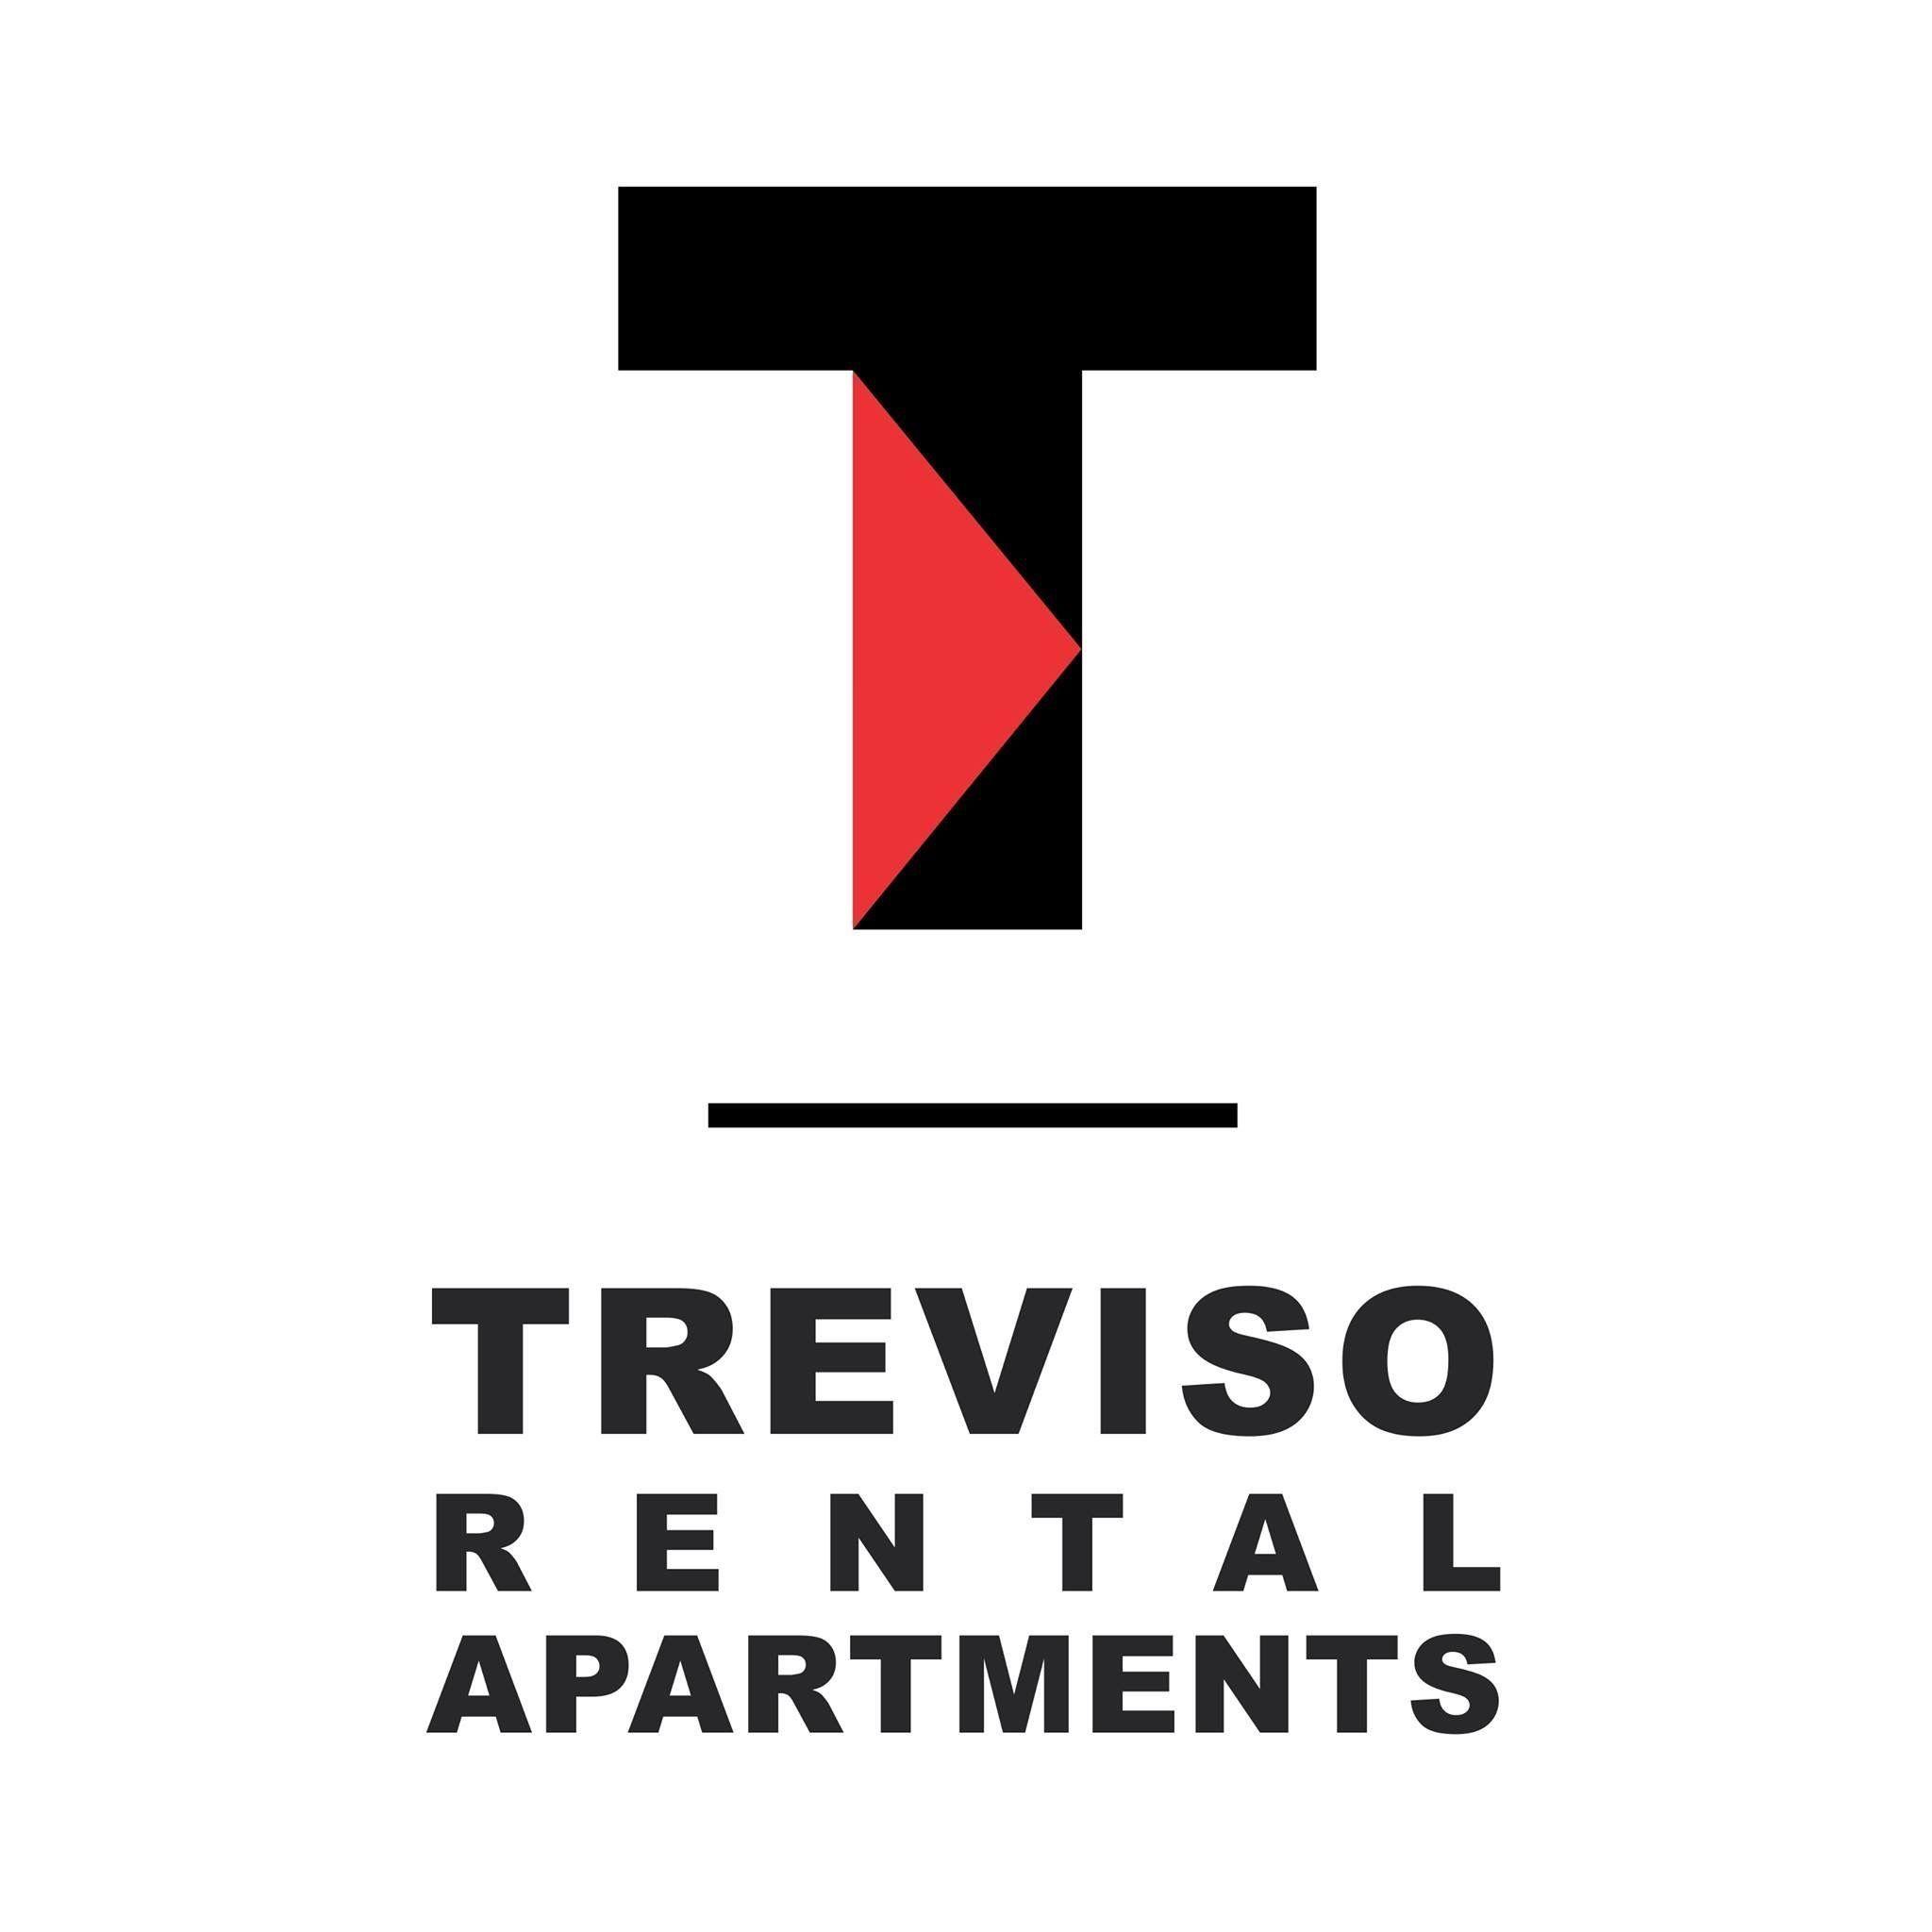 Treviso Logo - Treviso Rental Apartments Apartment Rentals, Apartment Living, Home ...